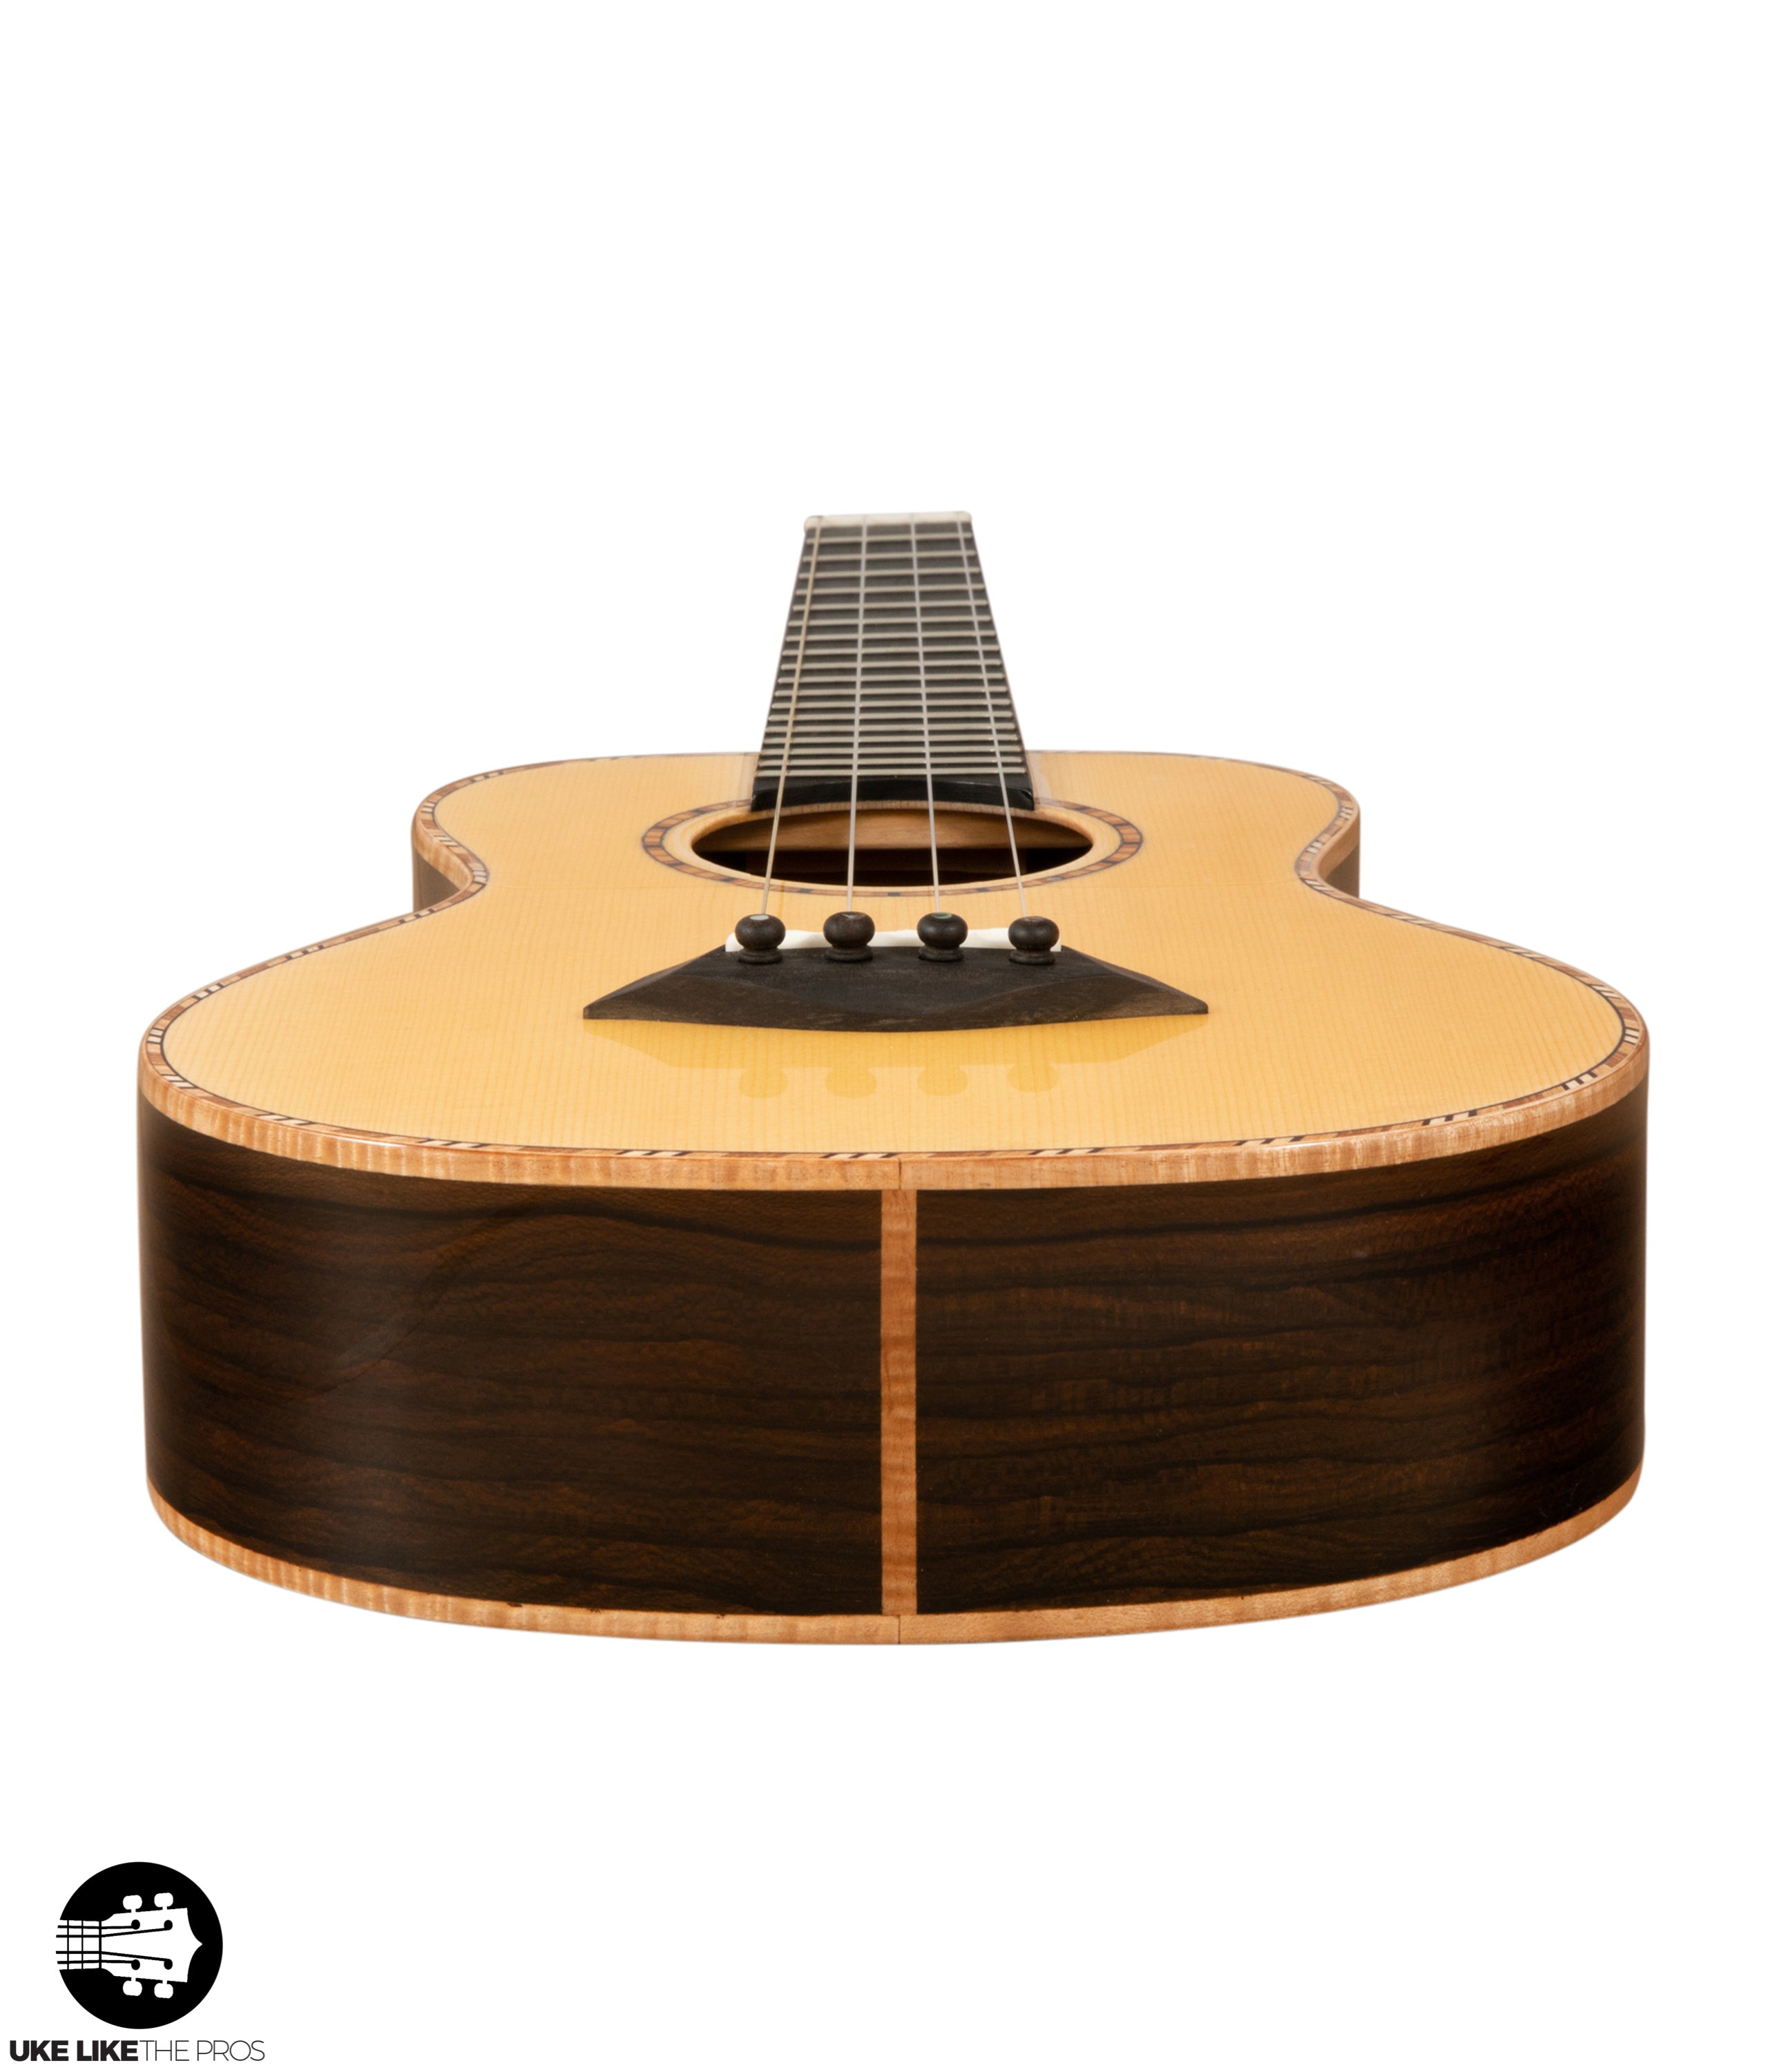 Guitarras Romero Model-T Custom Tenor Ukulele #57